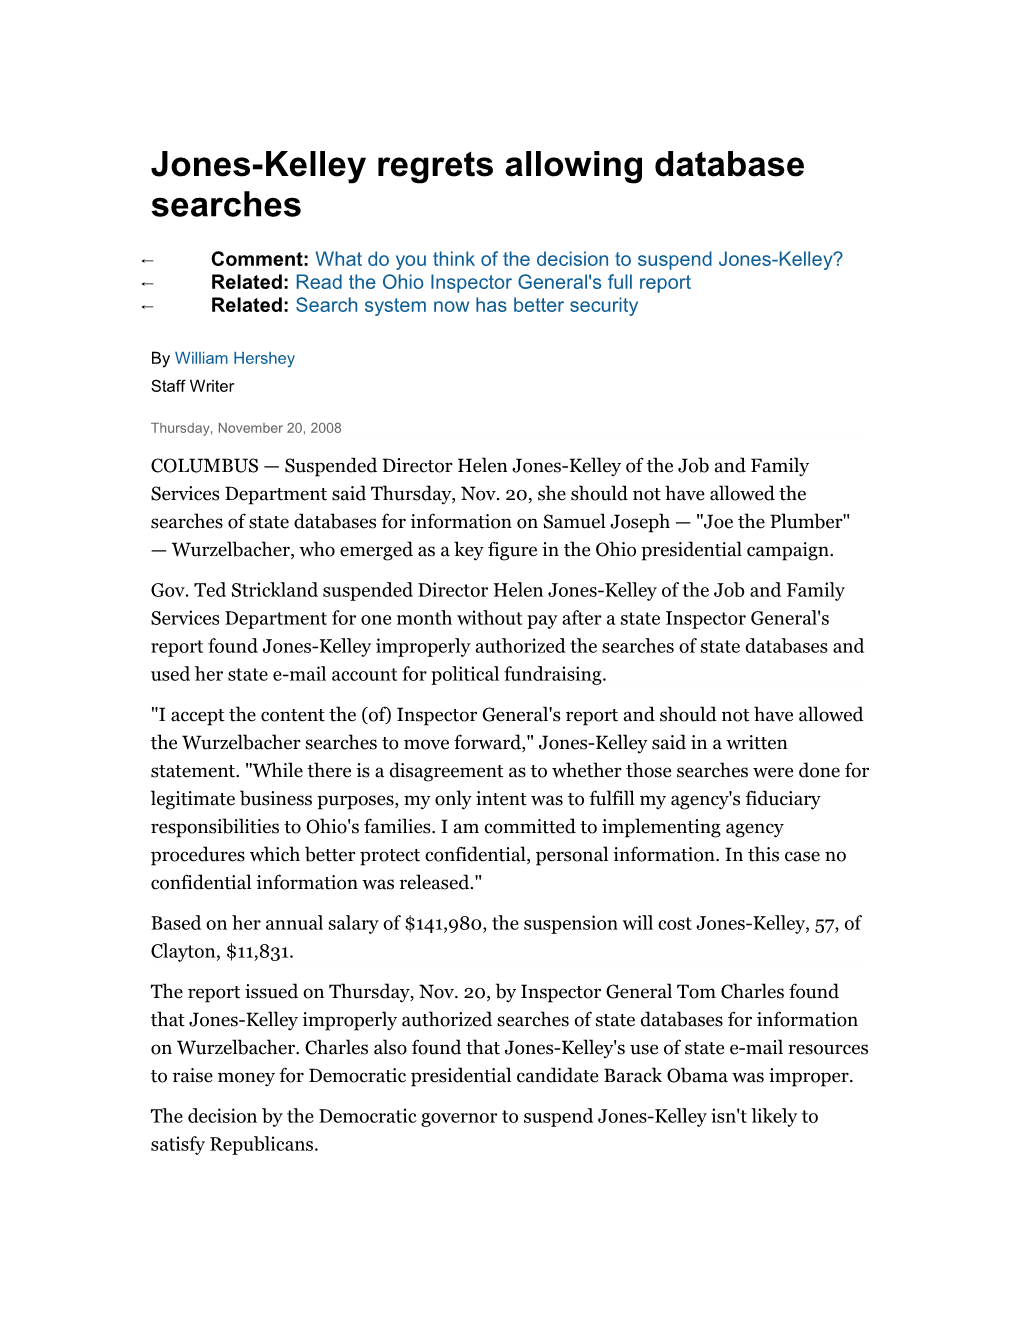 Jones-Kelley Regrets Allowing Database Searches